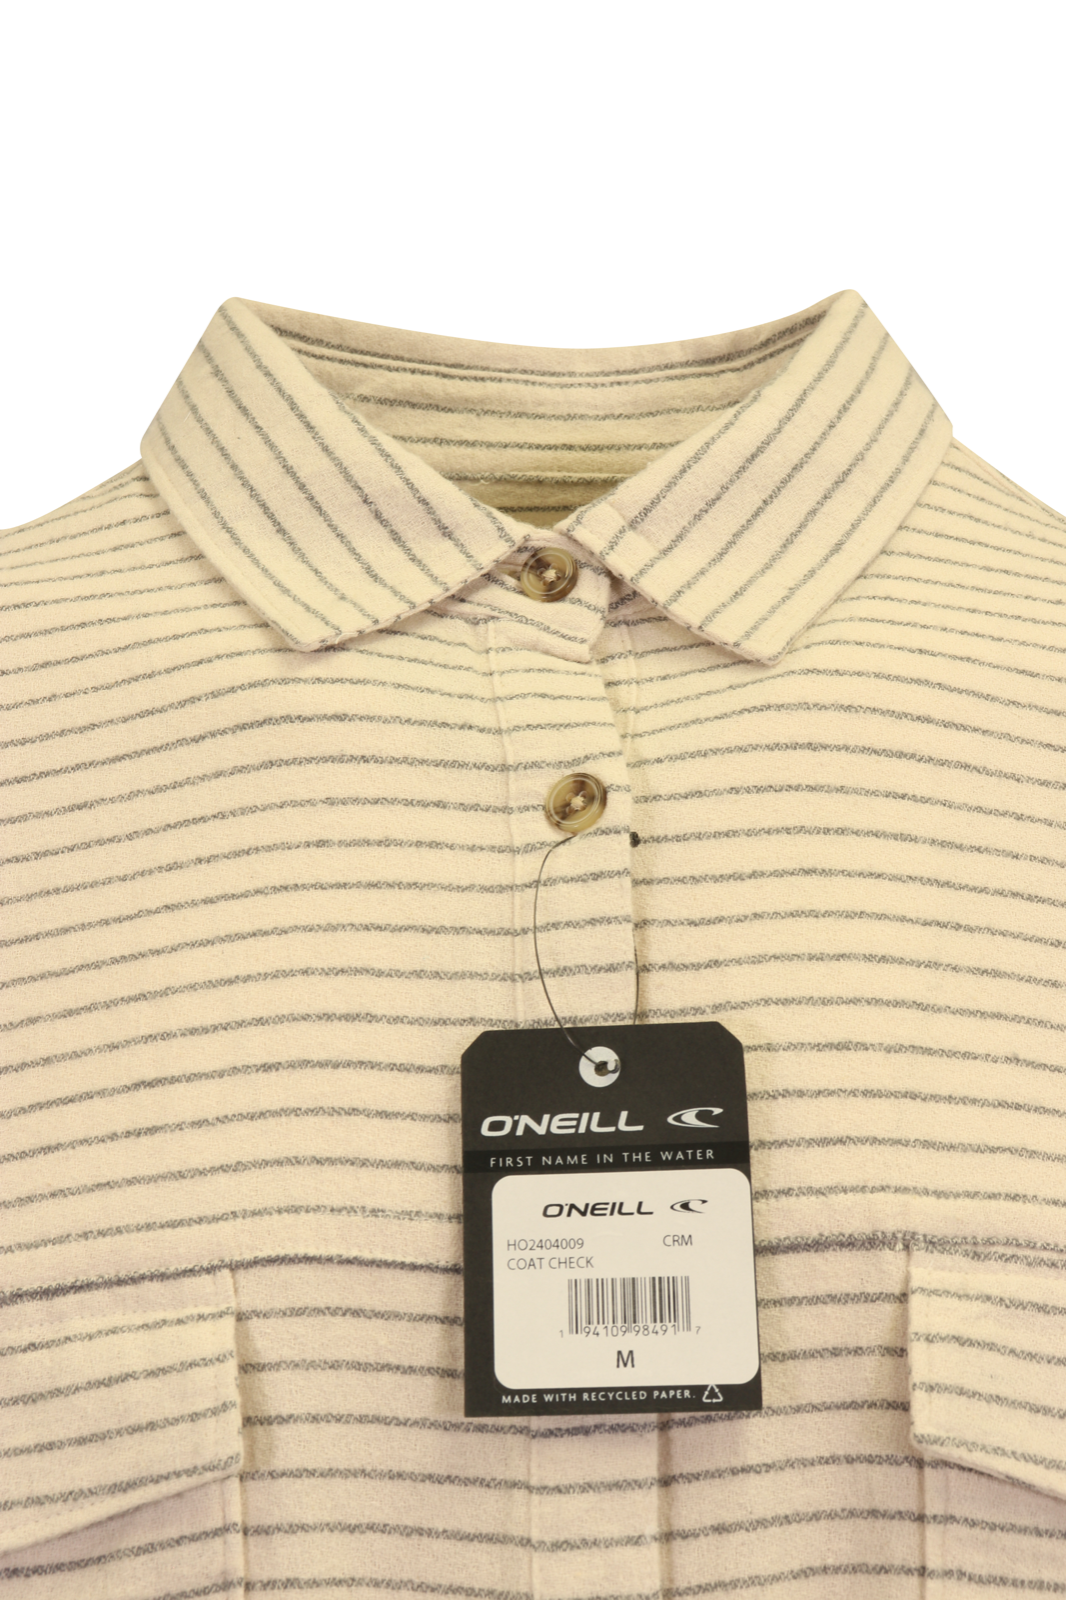 O'Neill Women's Flannel Shirt Horizontal Striped Beige Grey L/S (S17)